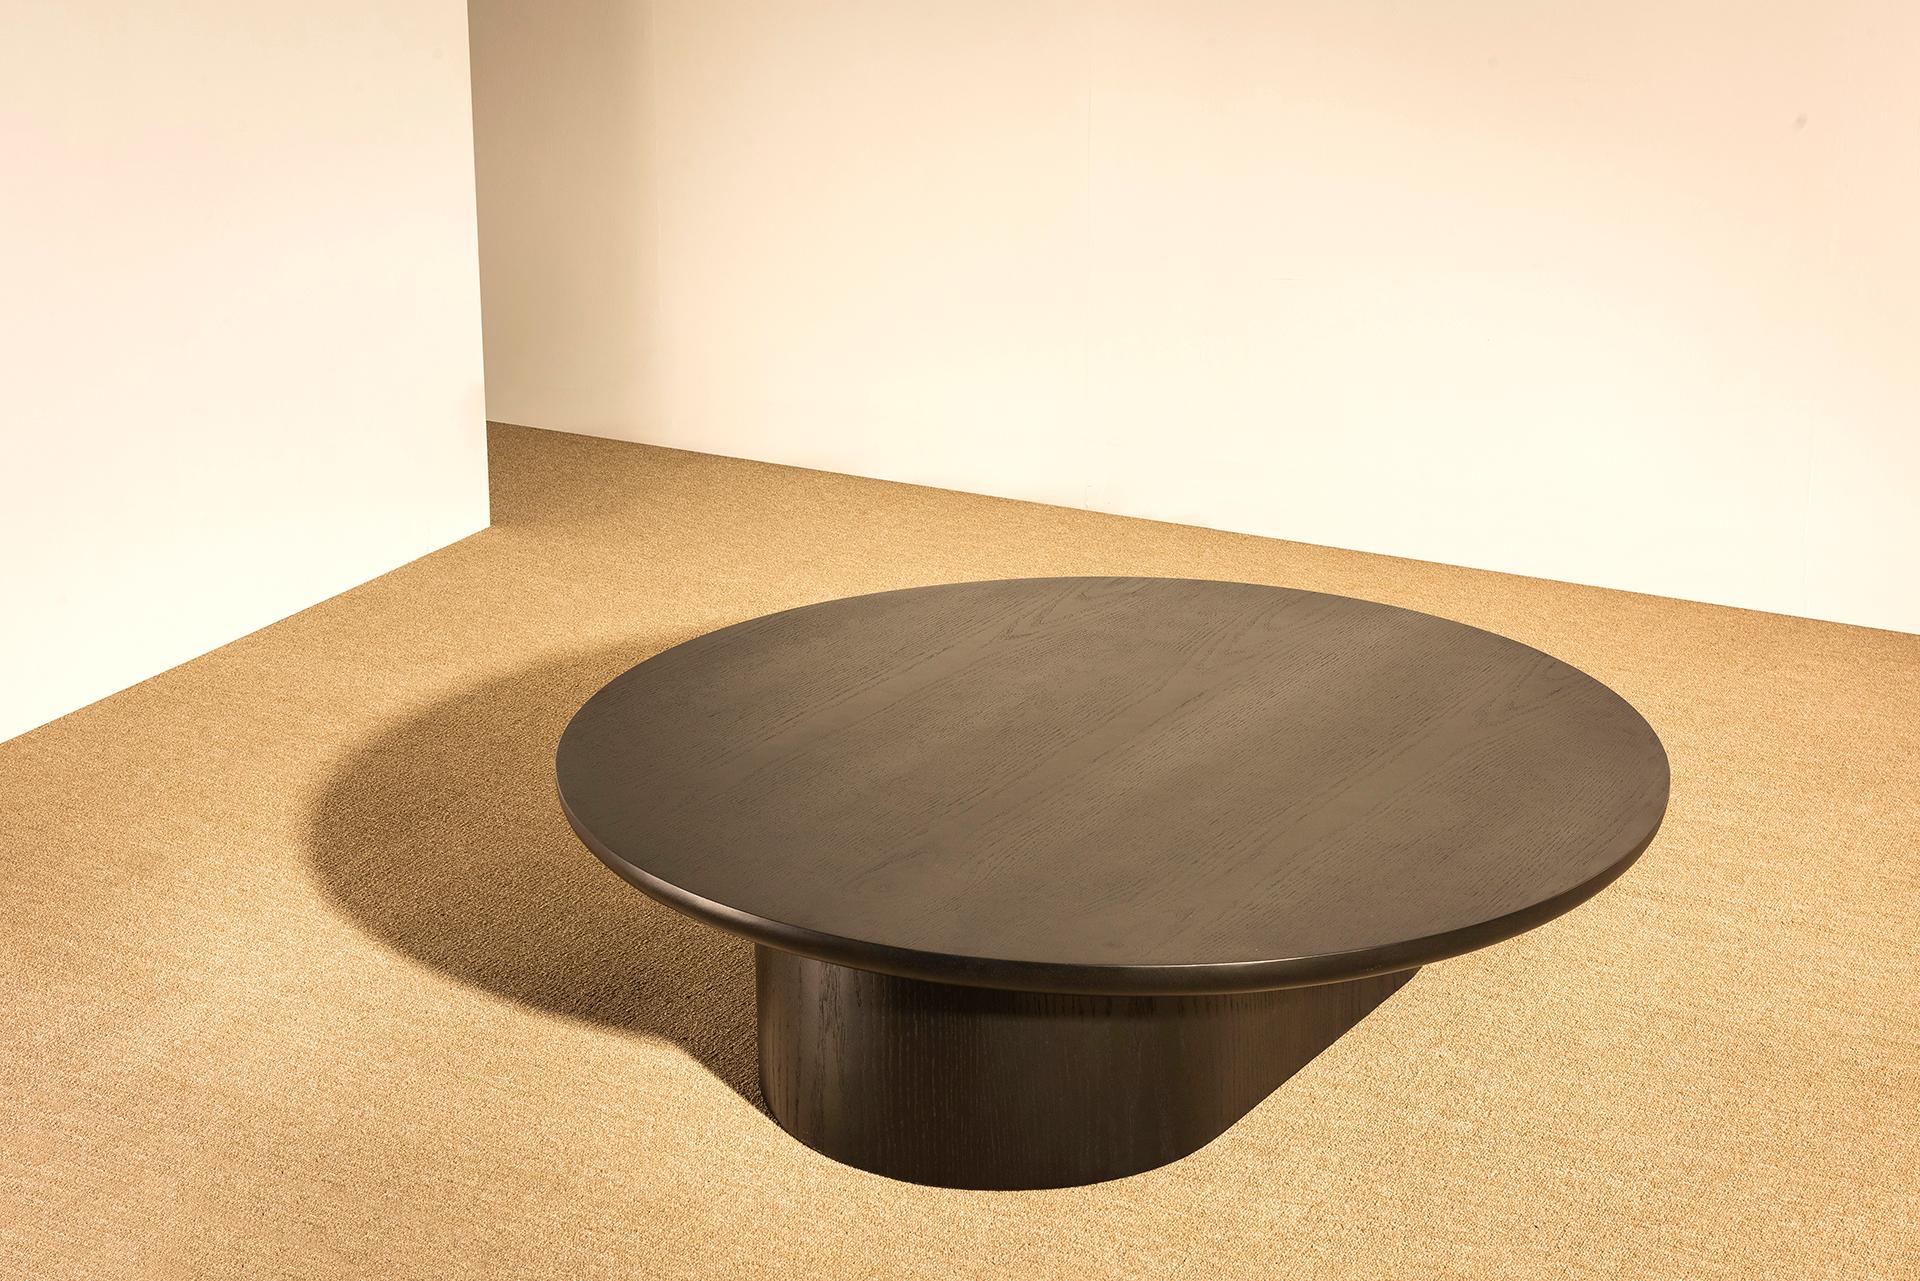 Ebonized Porto Set Center Table, by Rain, Contemporary Center Table, Laminated Oakwood